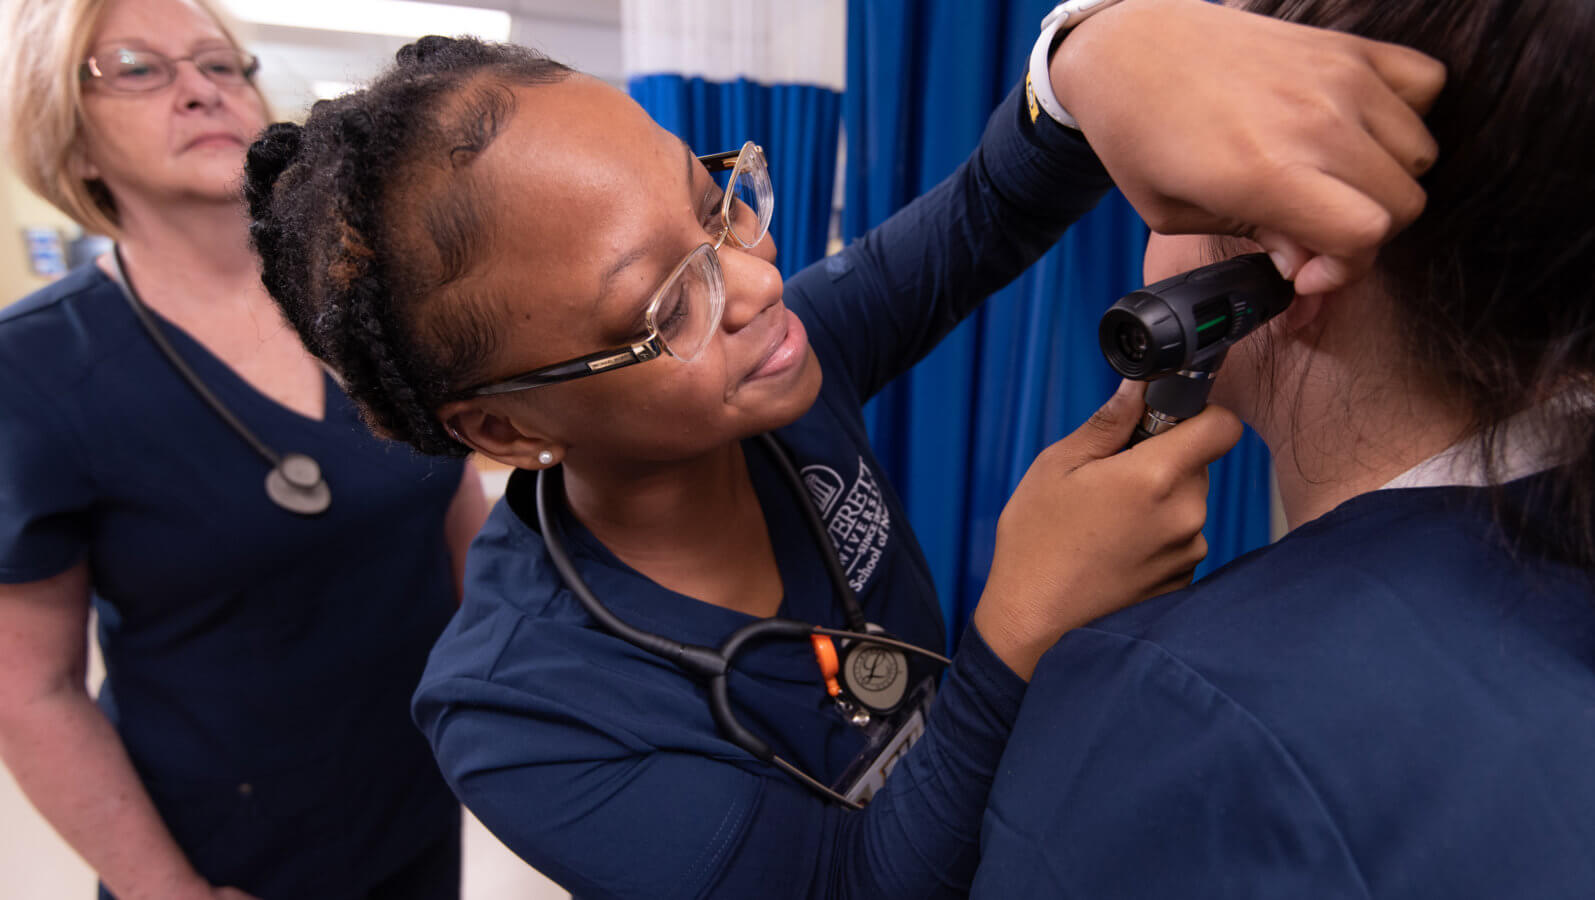 nursing students examining a patient